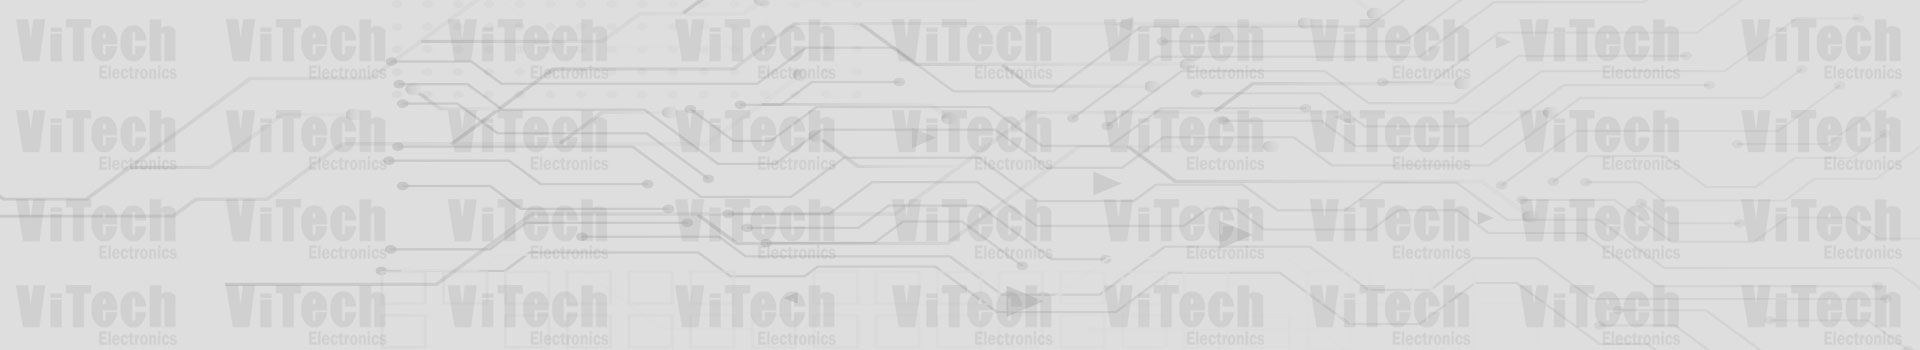 Vitech Banner1